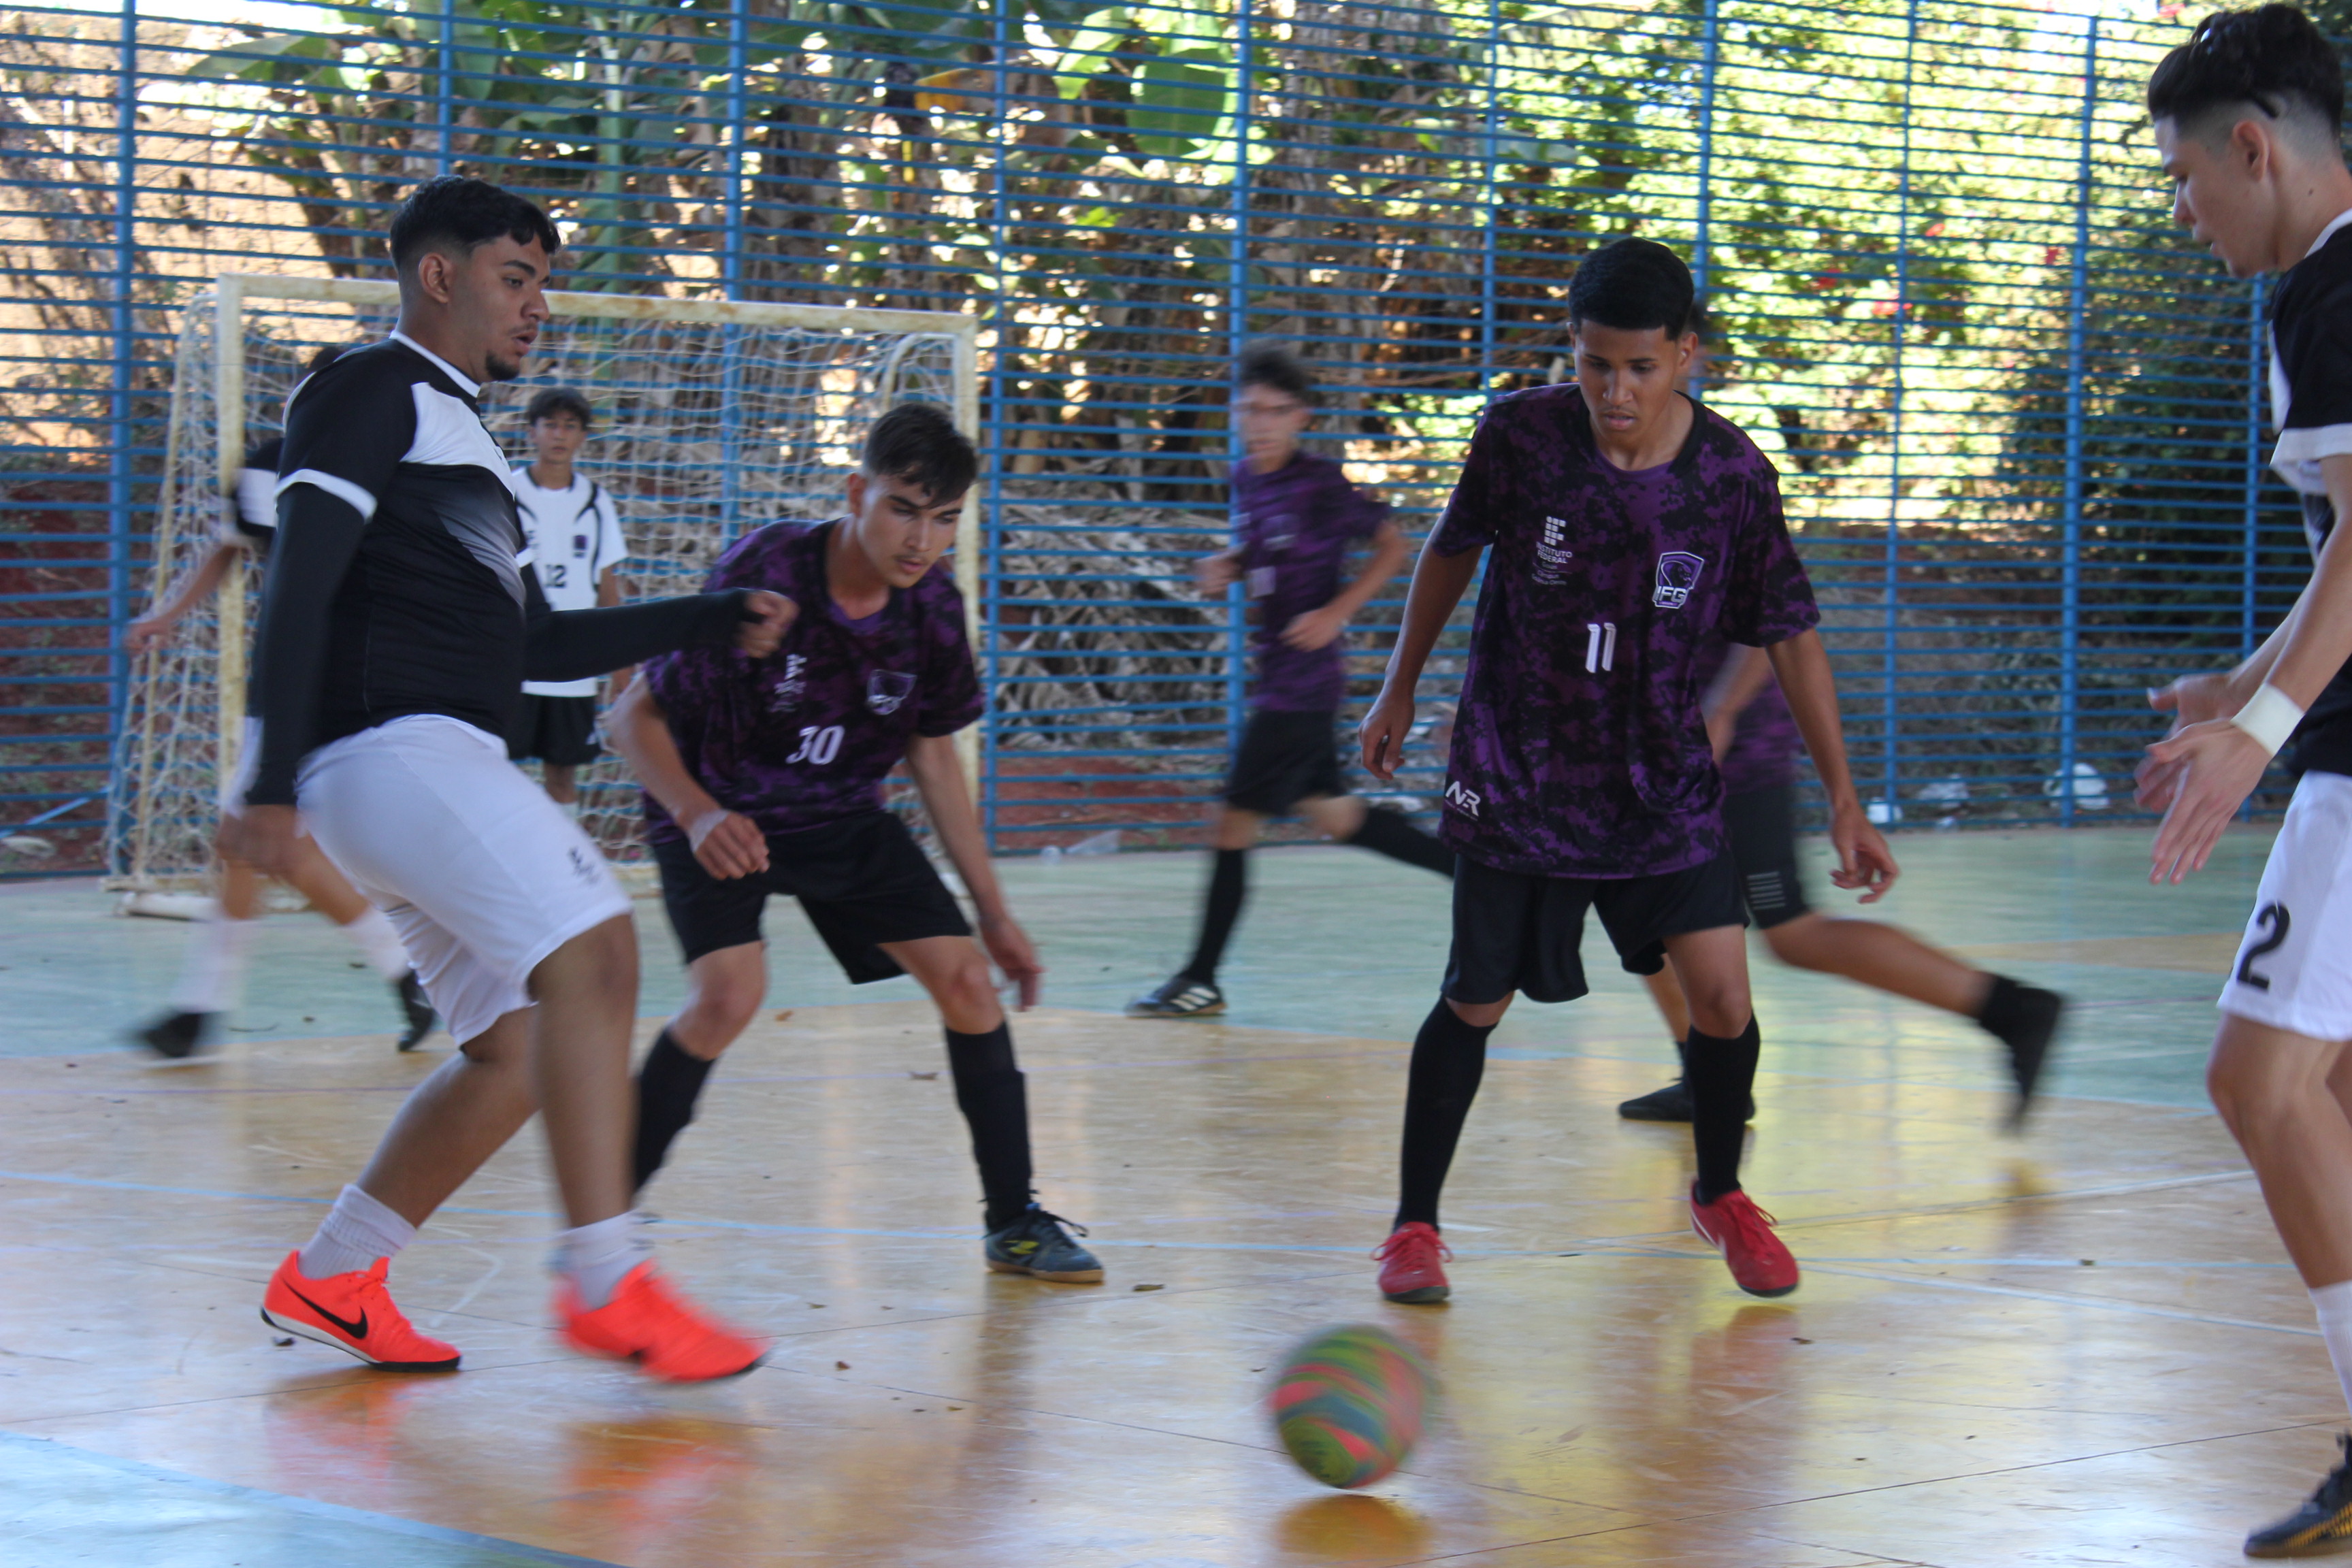 3ª partida de futsal desta terça-feira, entre as equipes dos câmpus Goiânia Oeste e Valparaíso